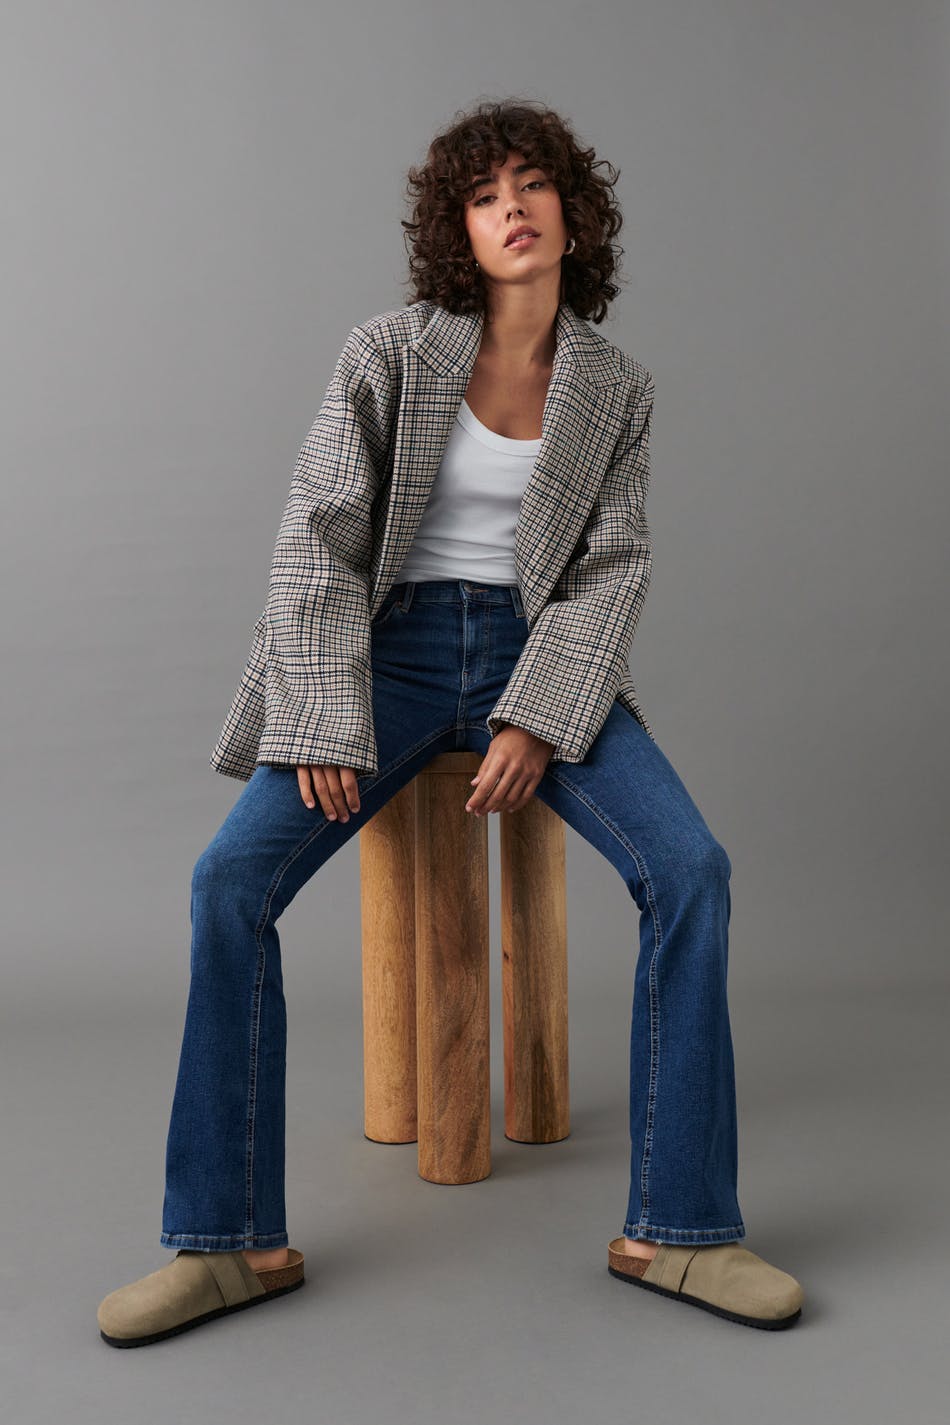 Low waist bootcut jeans - Blue - Women - Gina Tricot